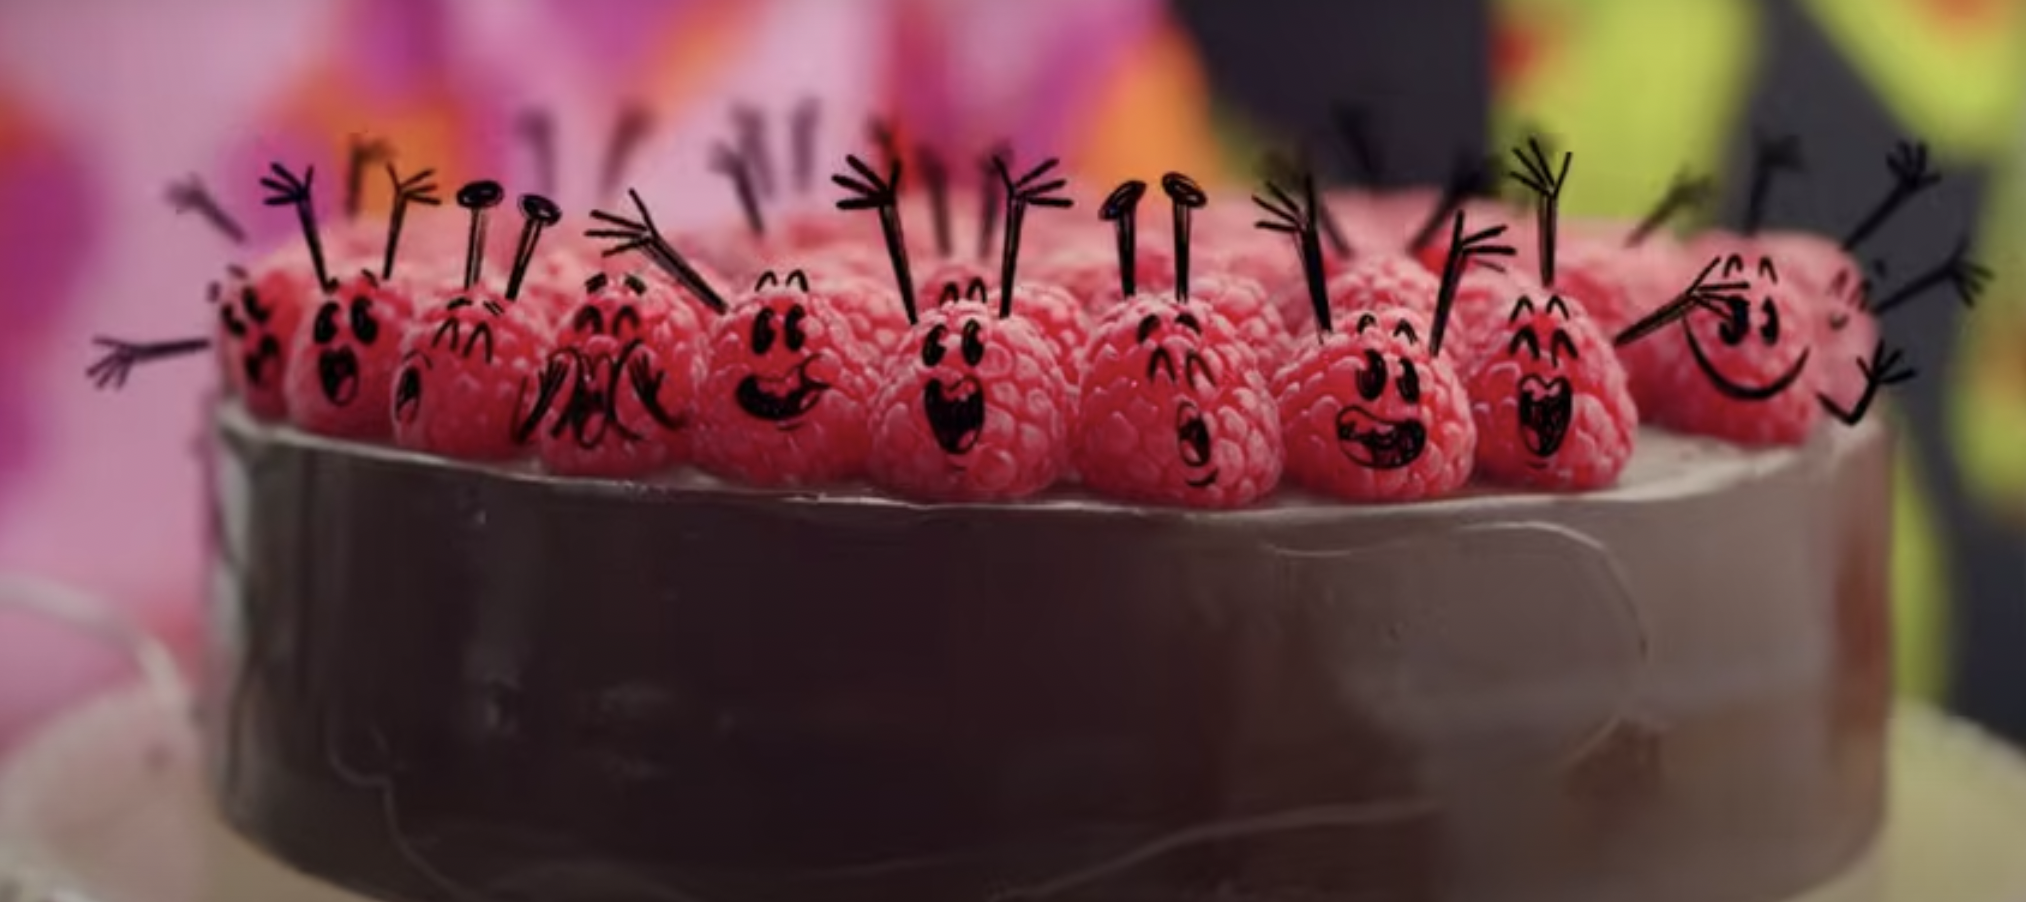 Animated raspberries cheer atop a chocolate ganache cake.